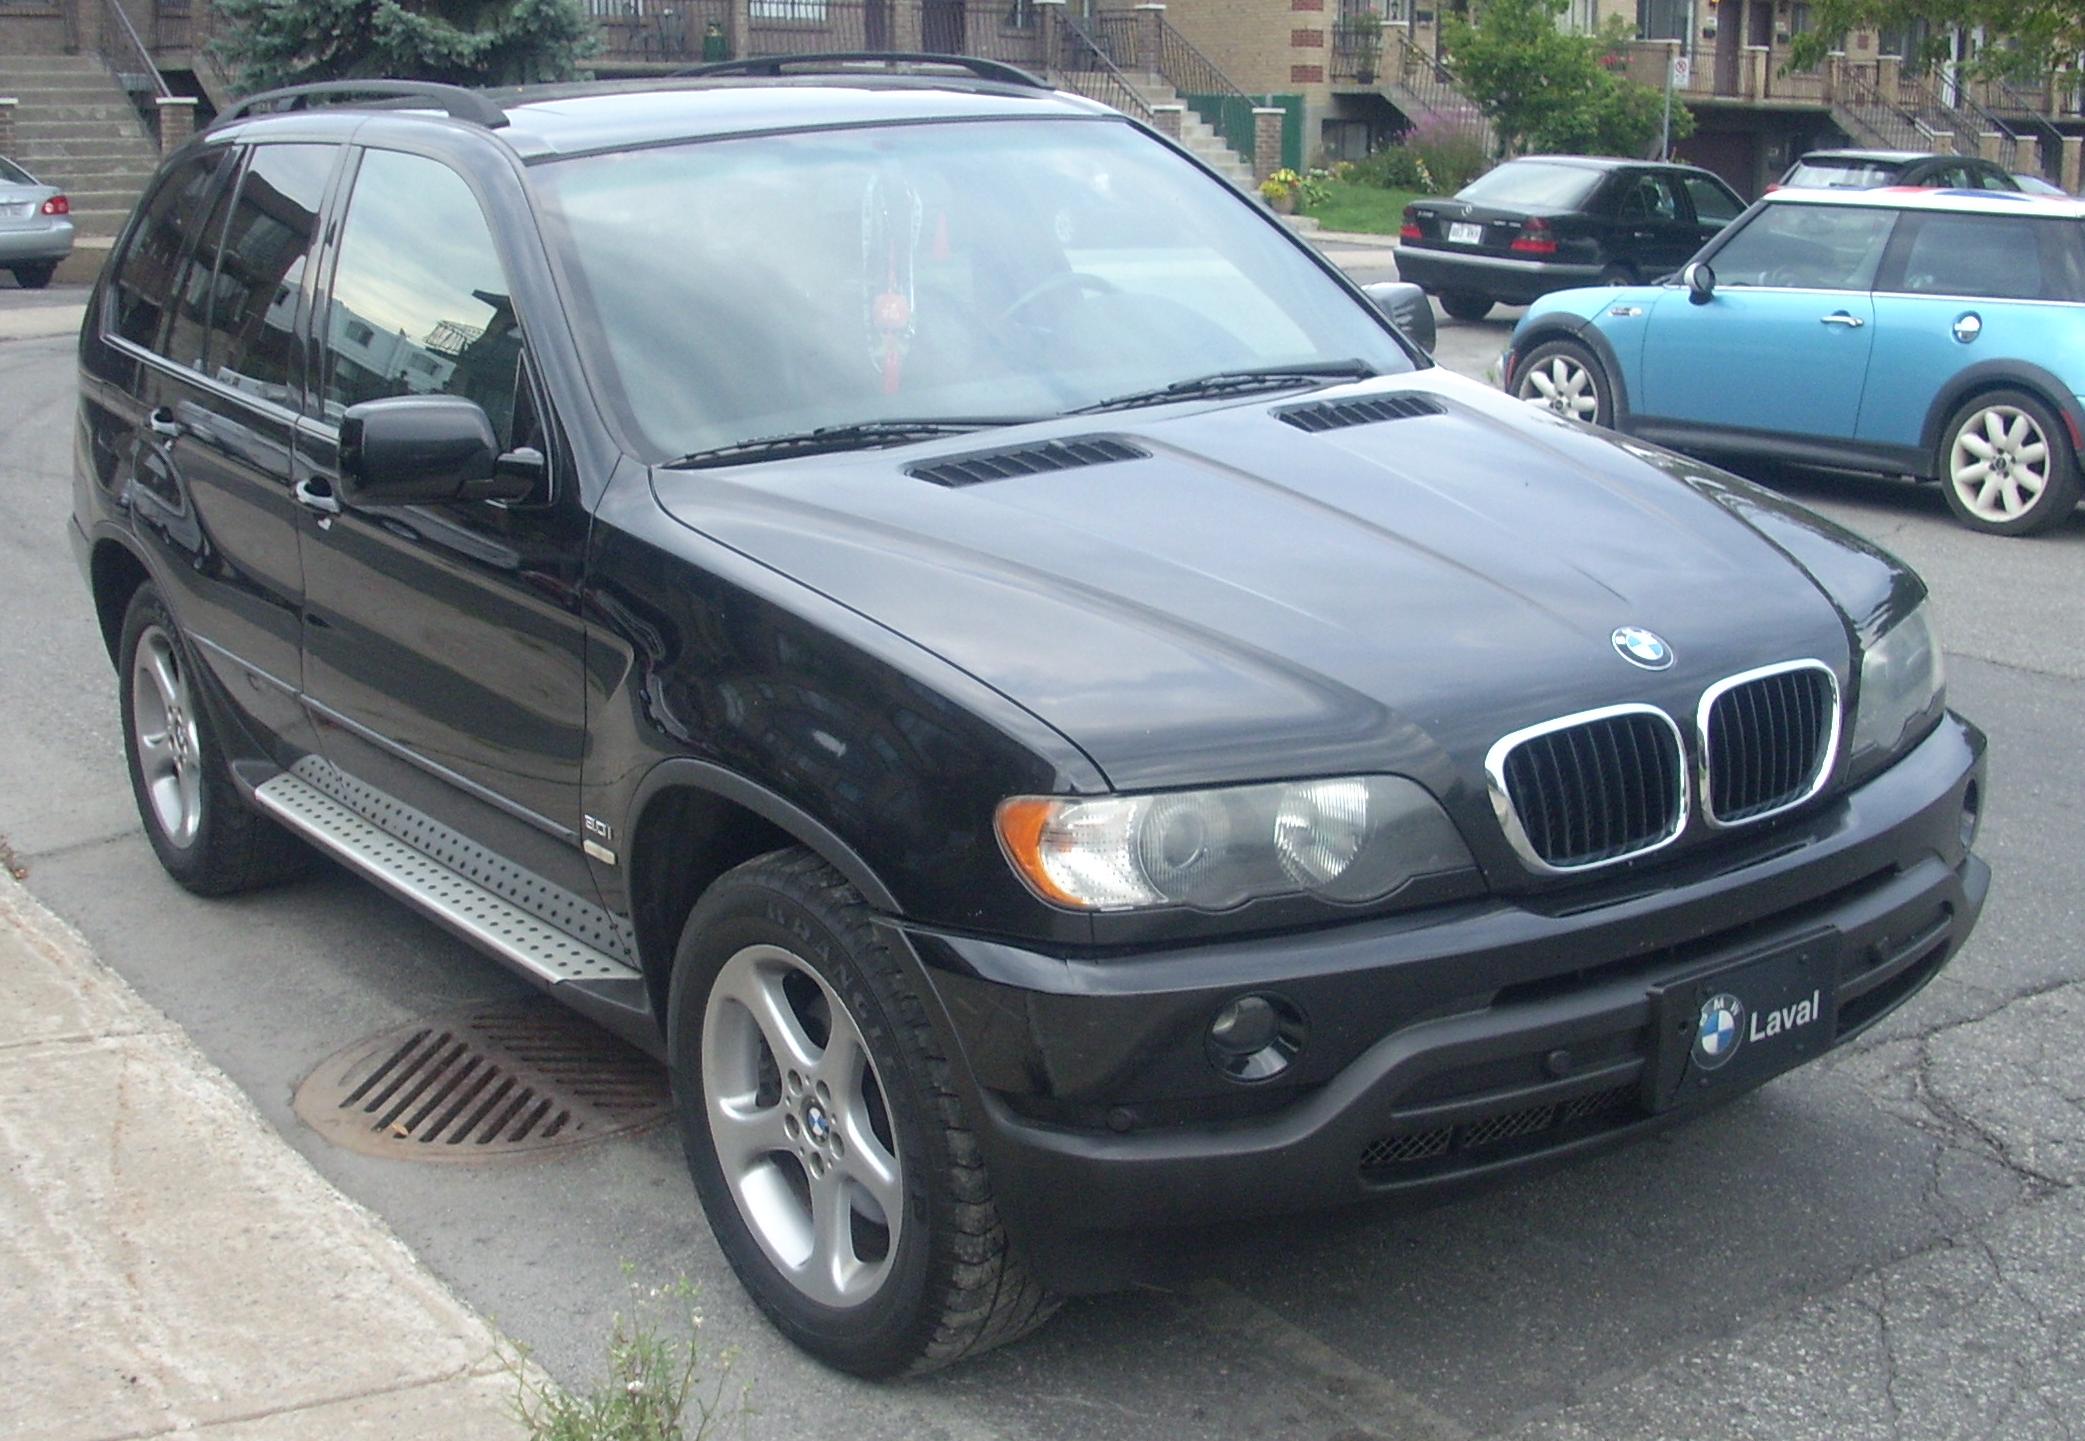 File:2001-'03 BMW X5 3.0i.JPG - Wikimedia Commons